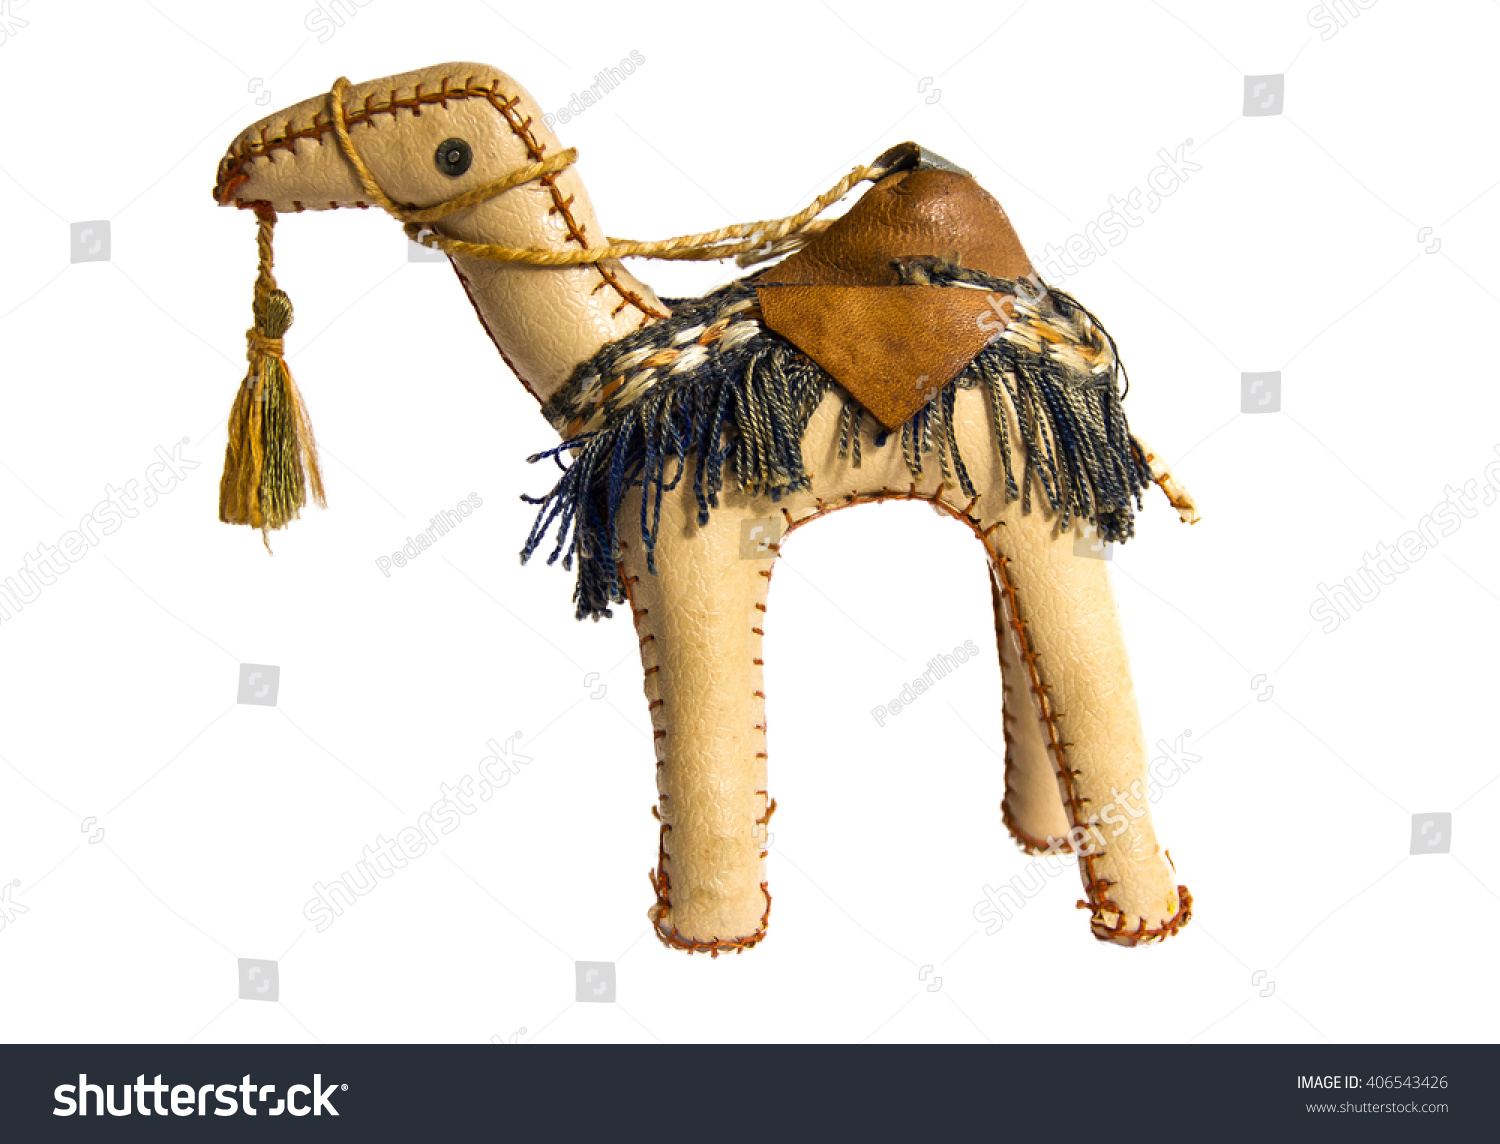 Egyptian Leather Large Toy Camel Animal Set:Great Gift 6" 12" 